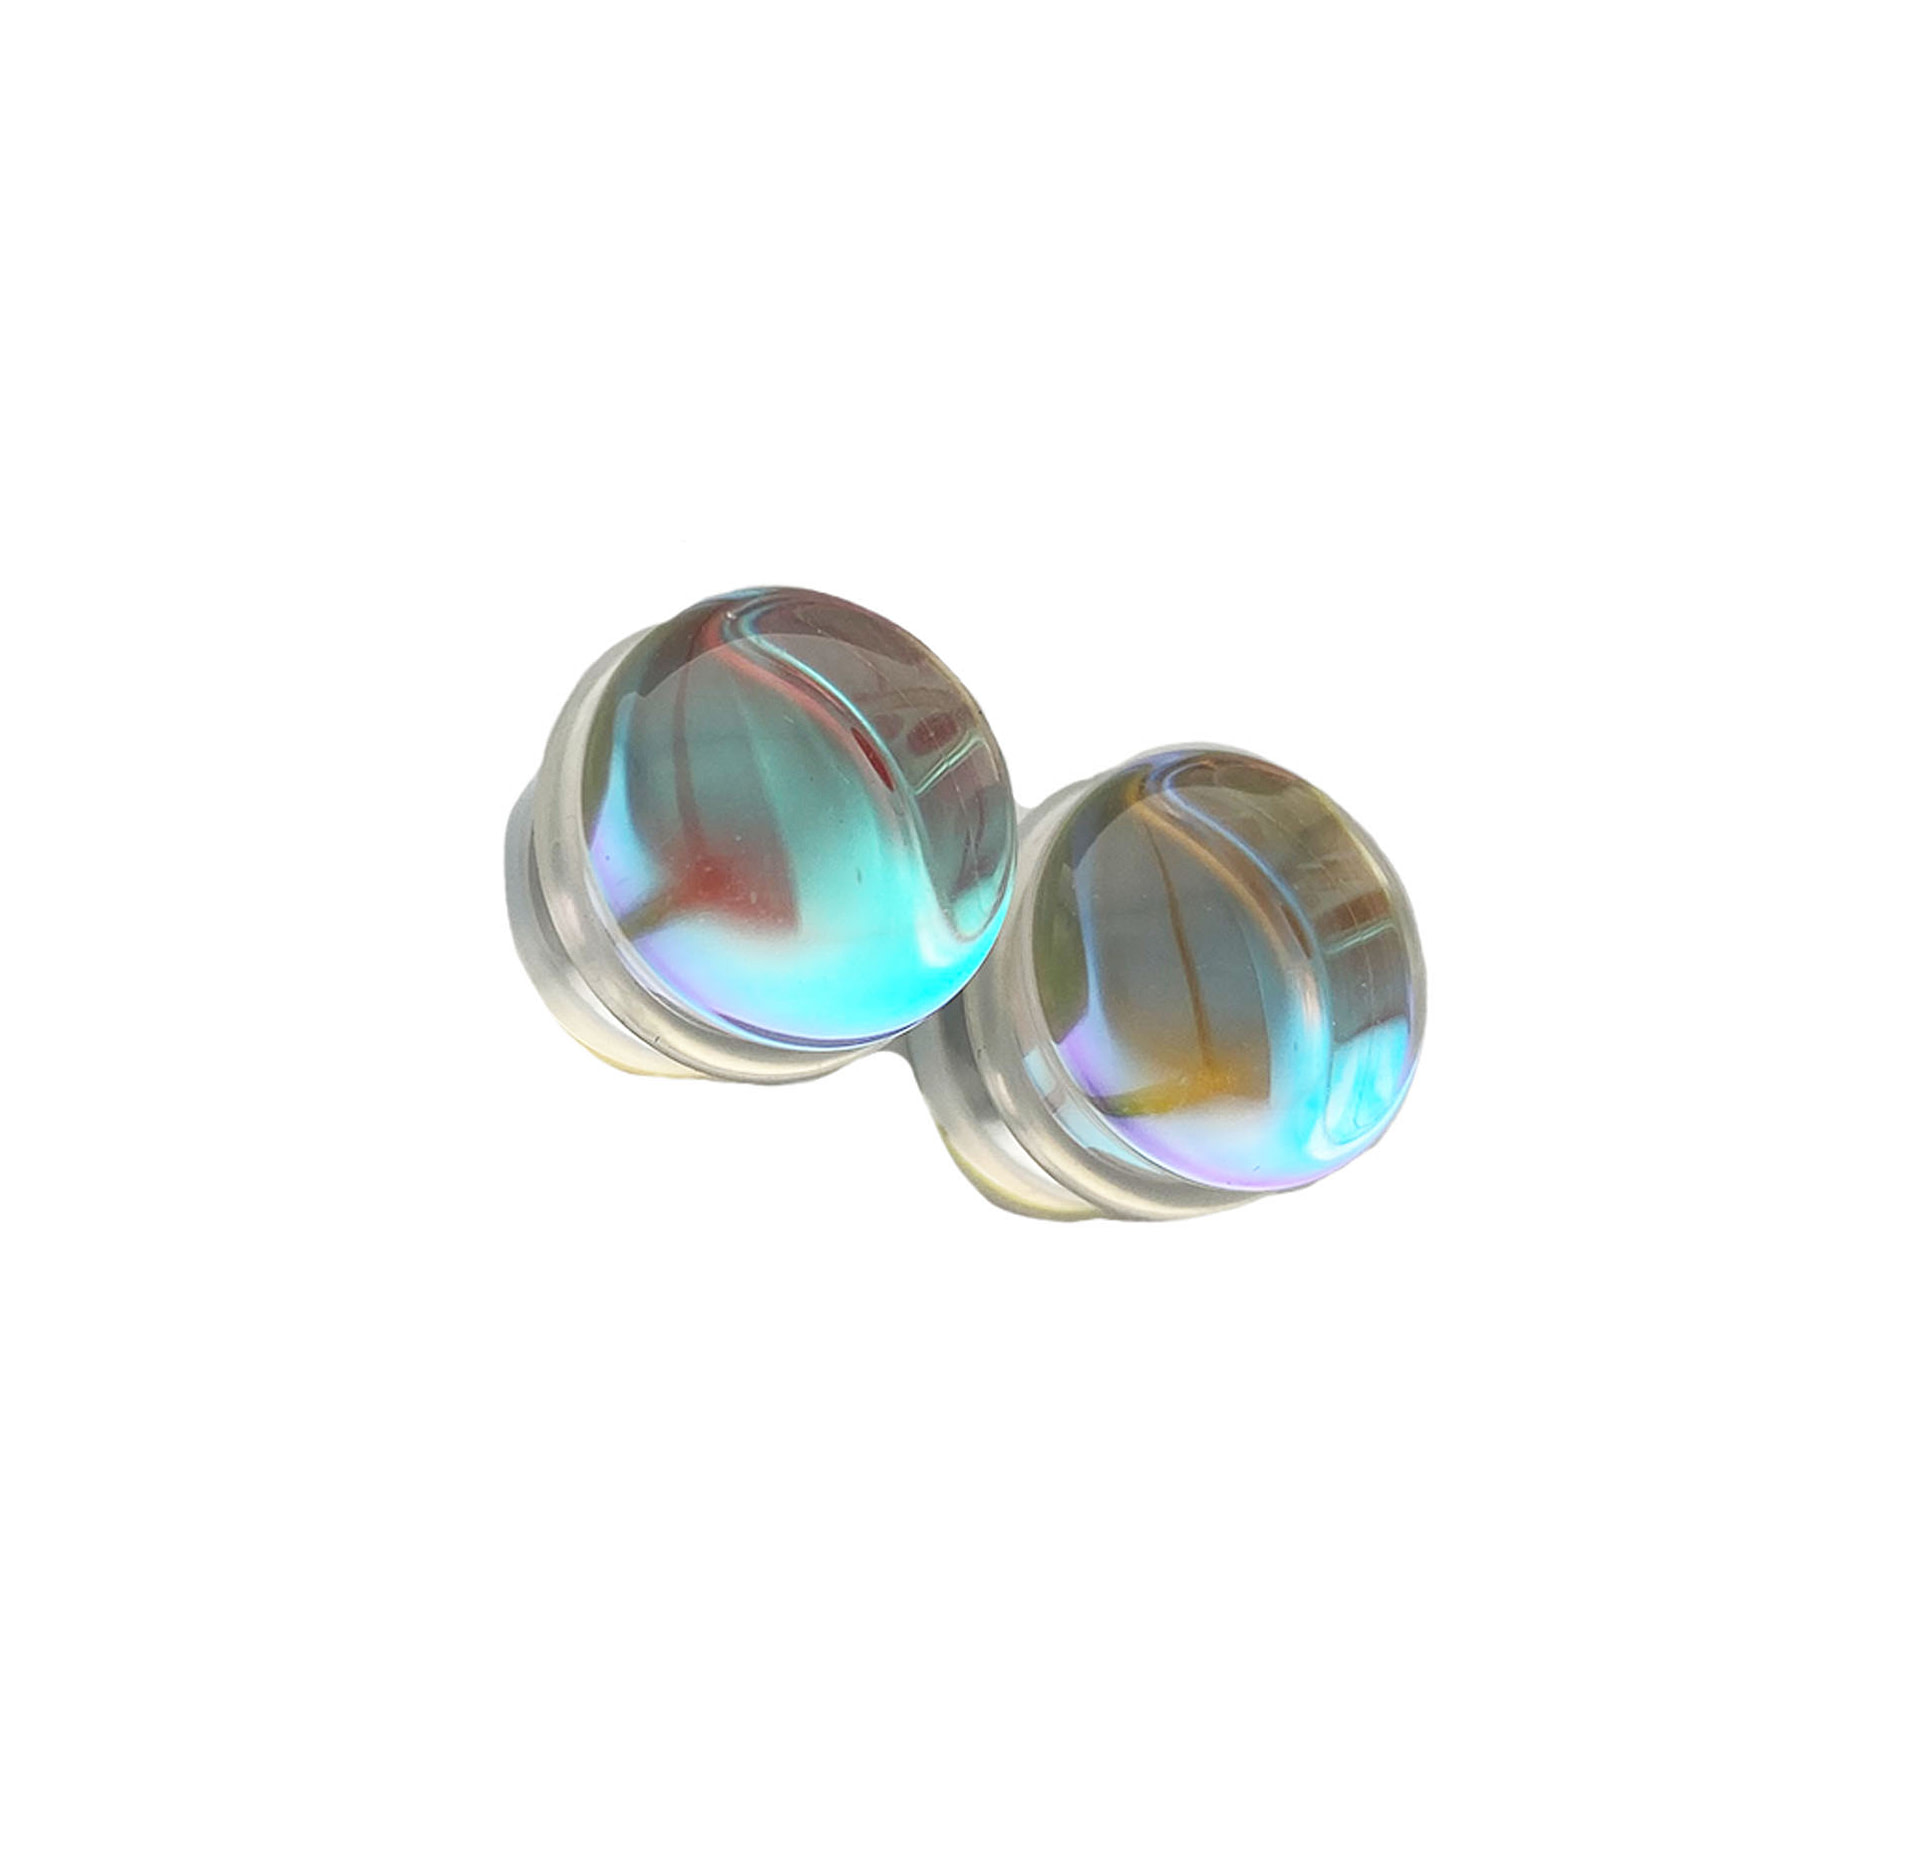 PAIR-Pyrex Glass Aurora Borealis Saddle Flare Ear Plugs 10mm/00 Gauge Body Je 